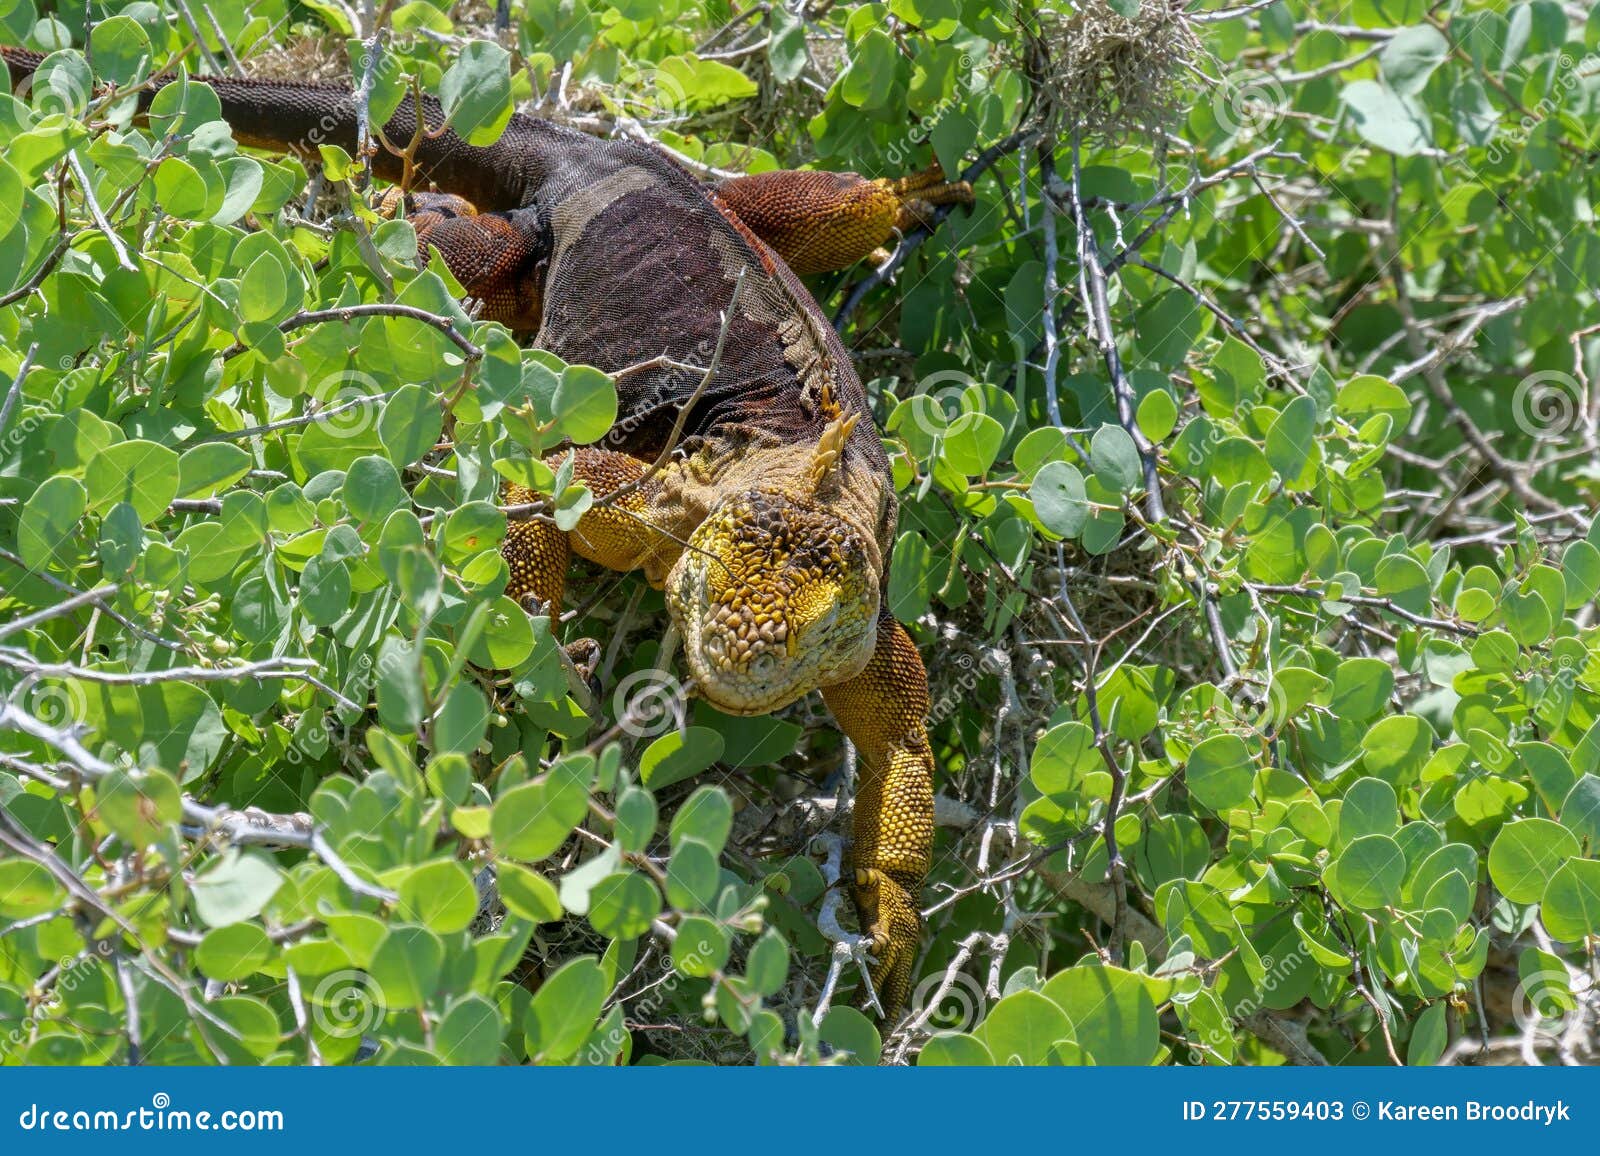 a bright yellow adult land iguana, iguana terrestre in a green bush at south plaza island